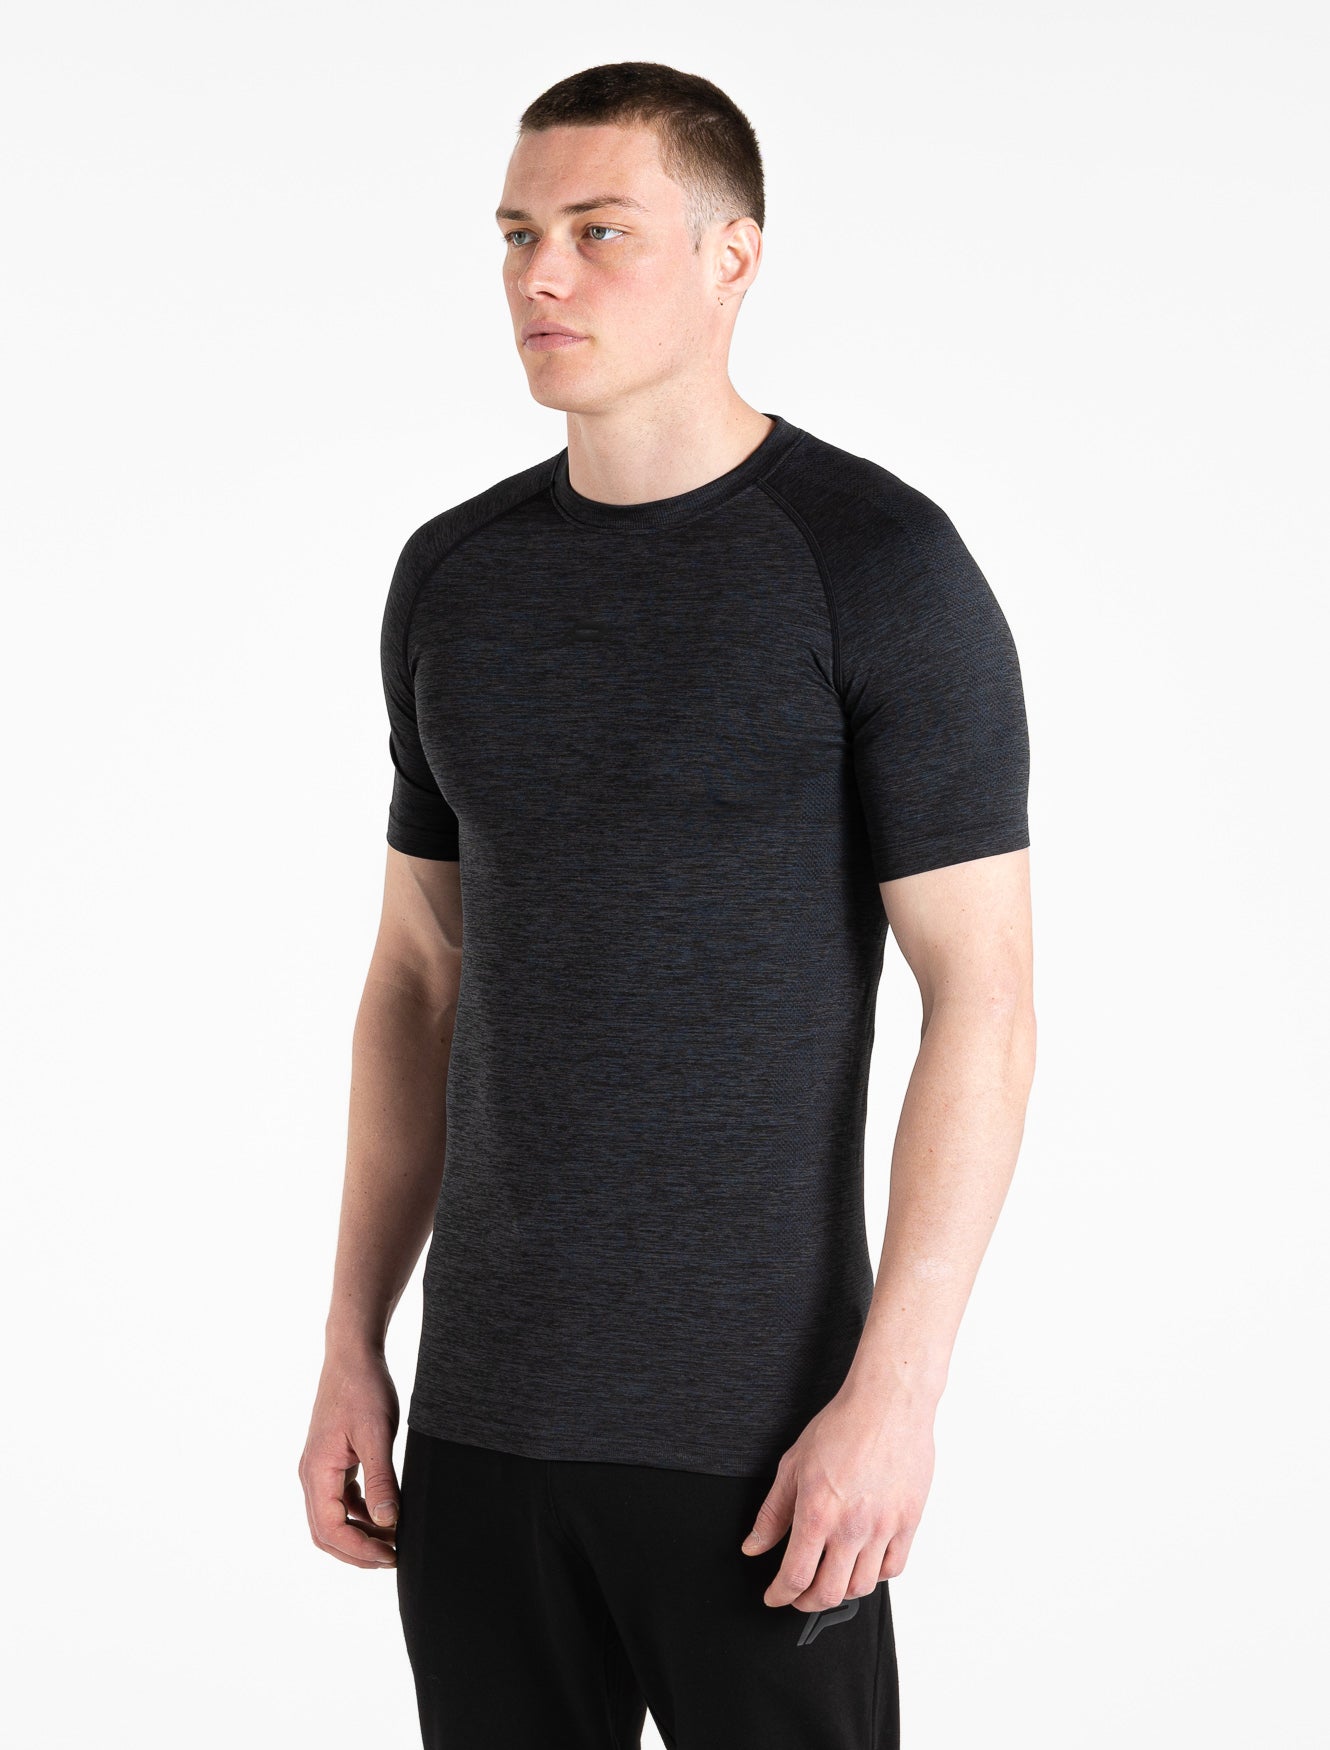 Intensity Seamless T-shirt / Black Marl Pursue Fitness 5